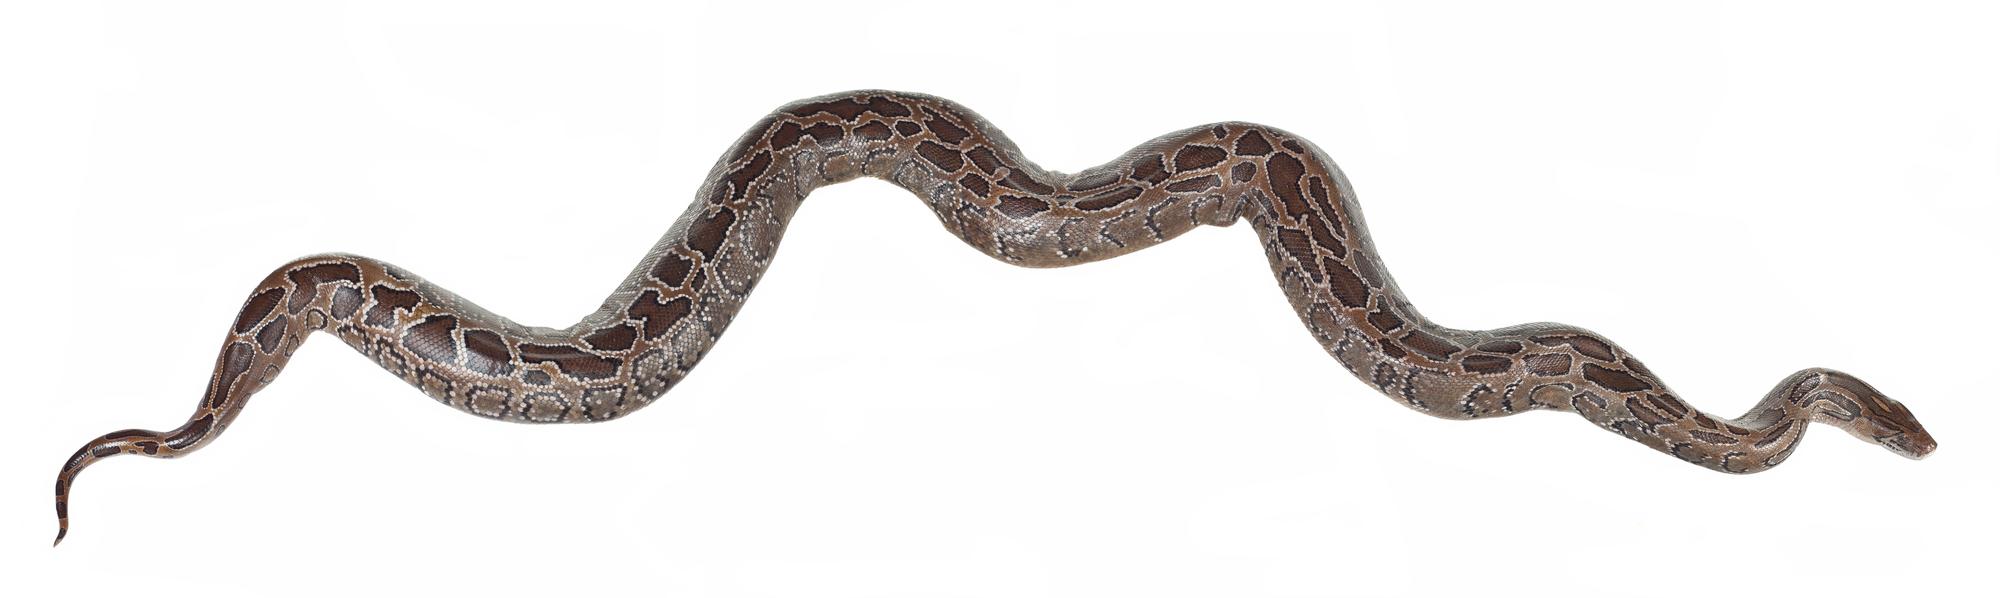 Python molurus bivittatus Kuhl, 1820, burmese python 